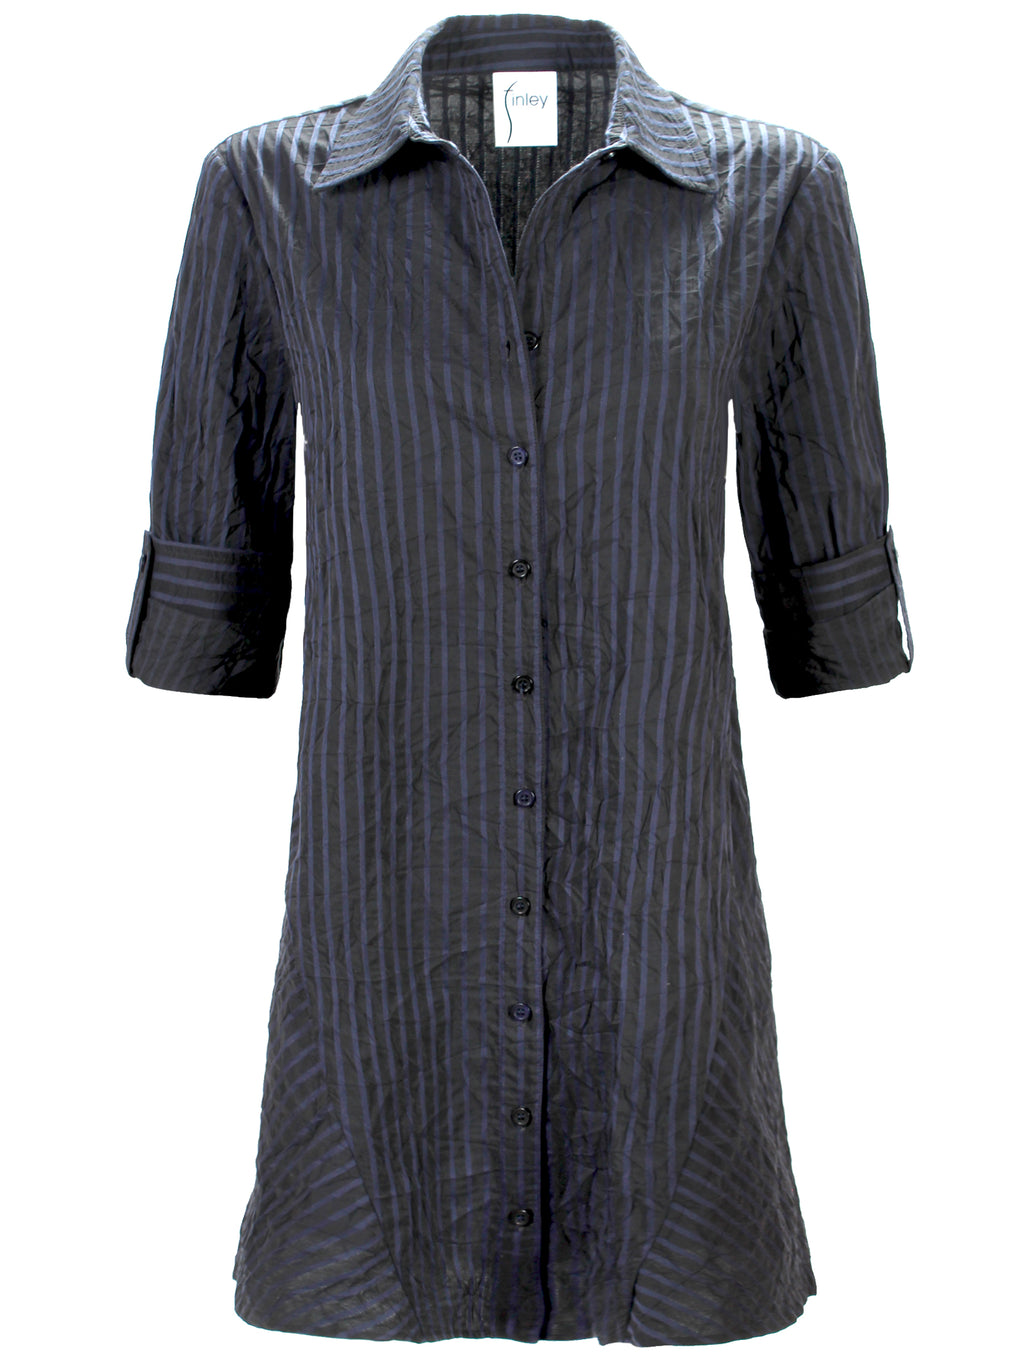 Black Striped Button Up Shirt Dress | Finley Shirts